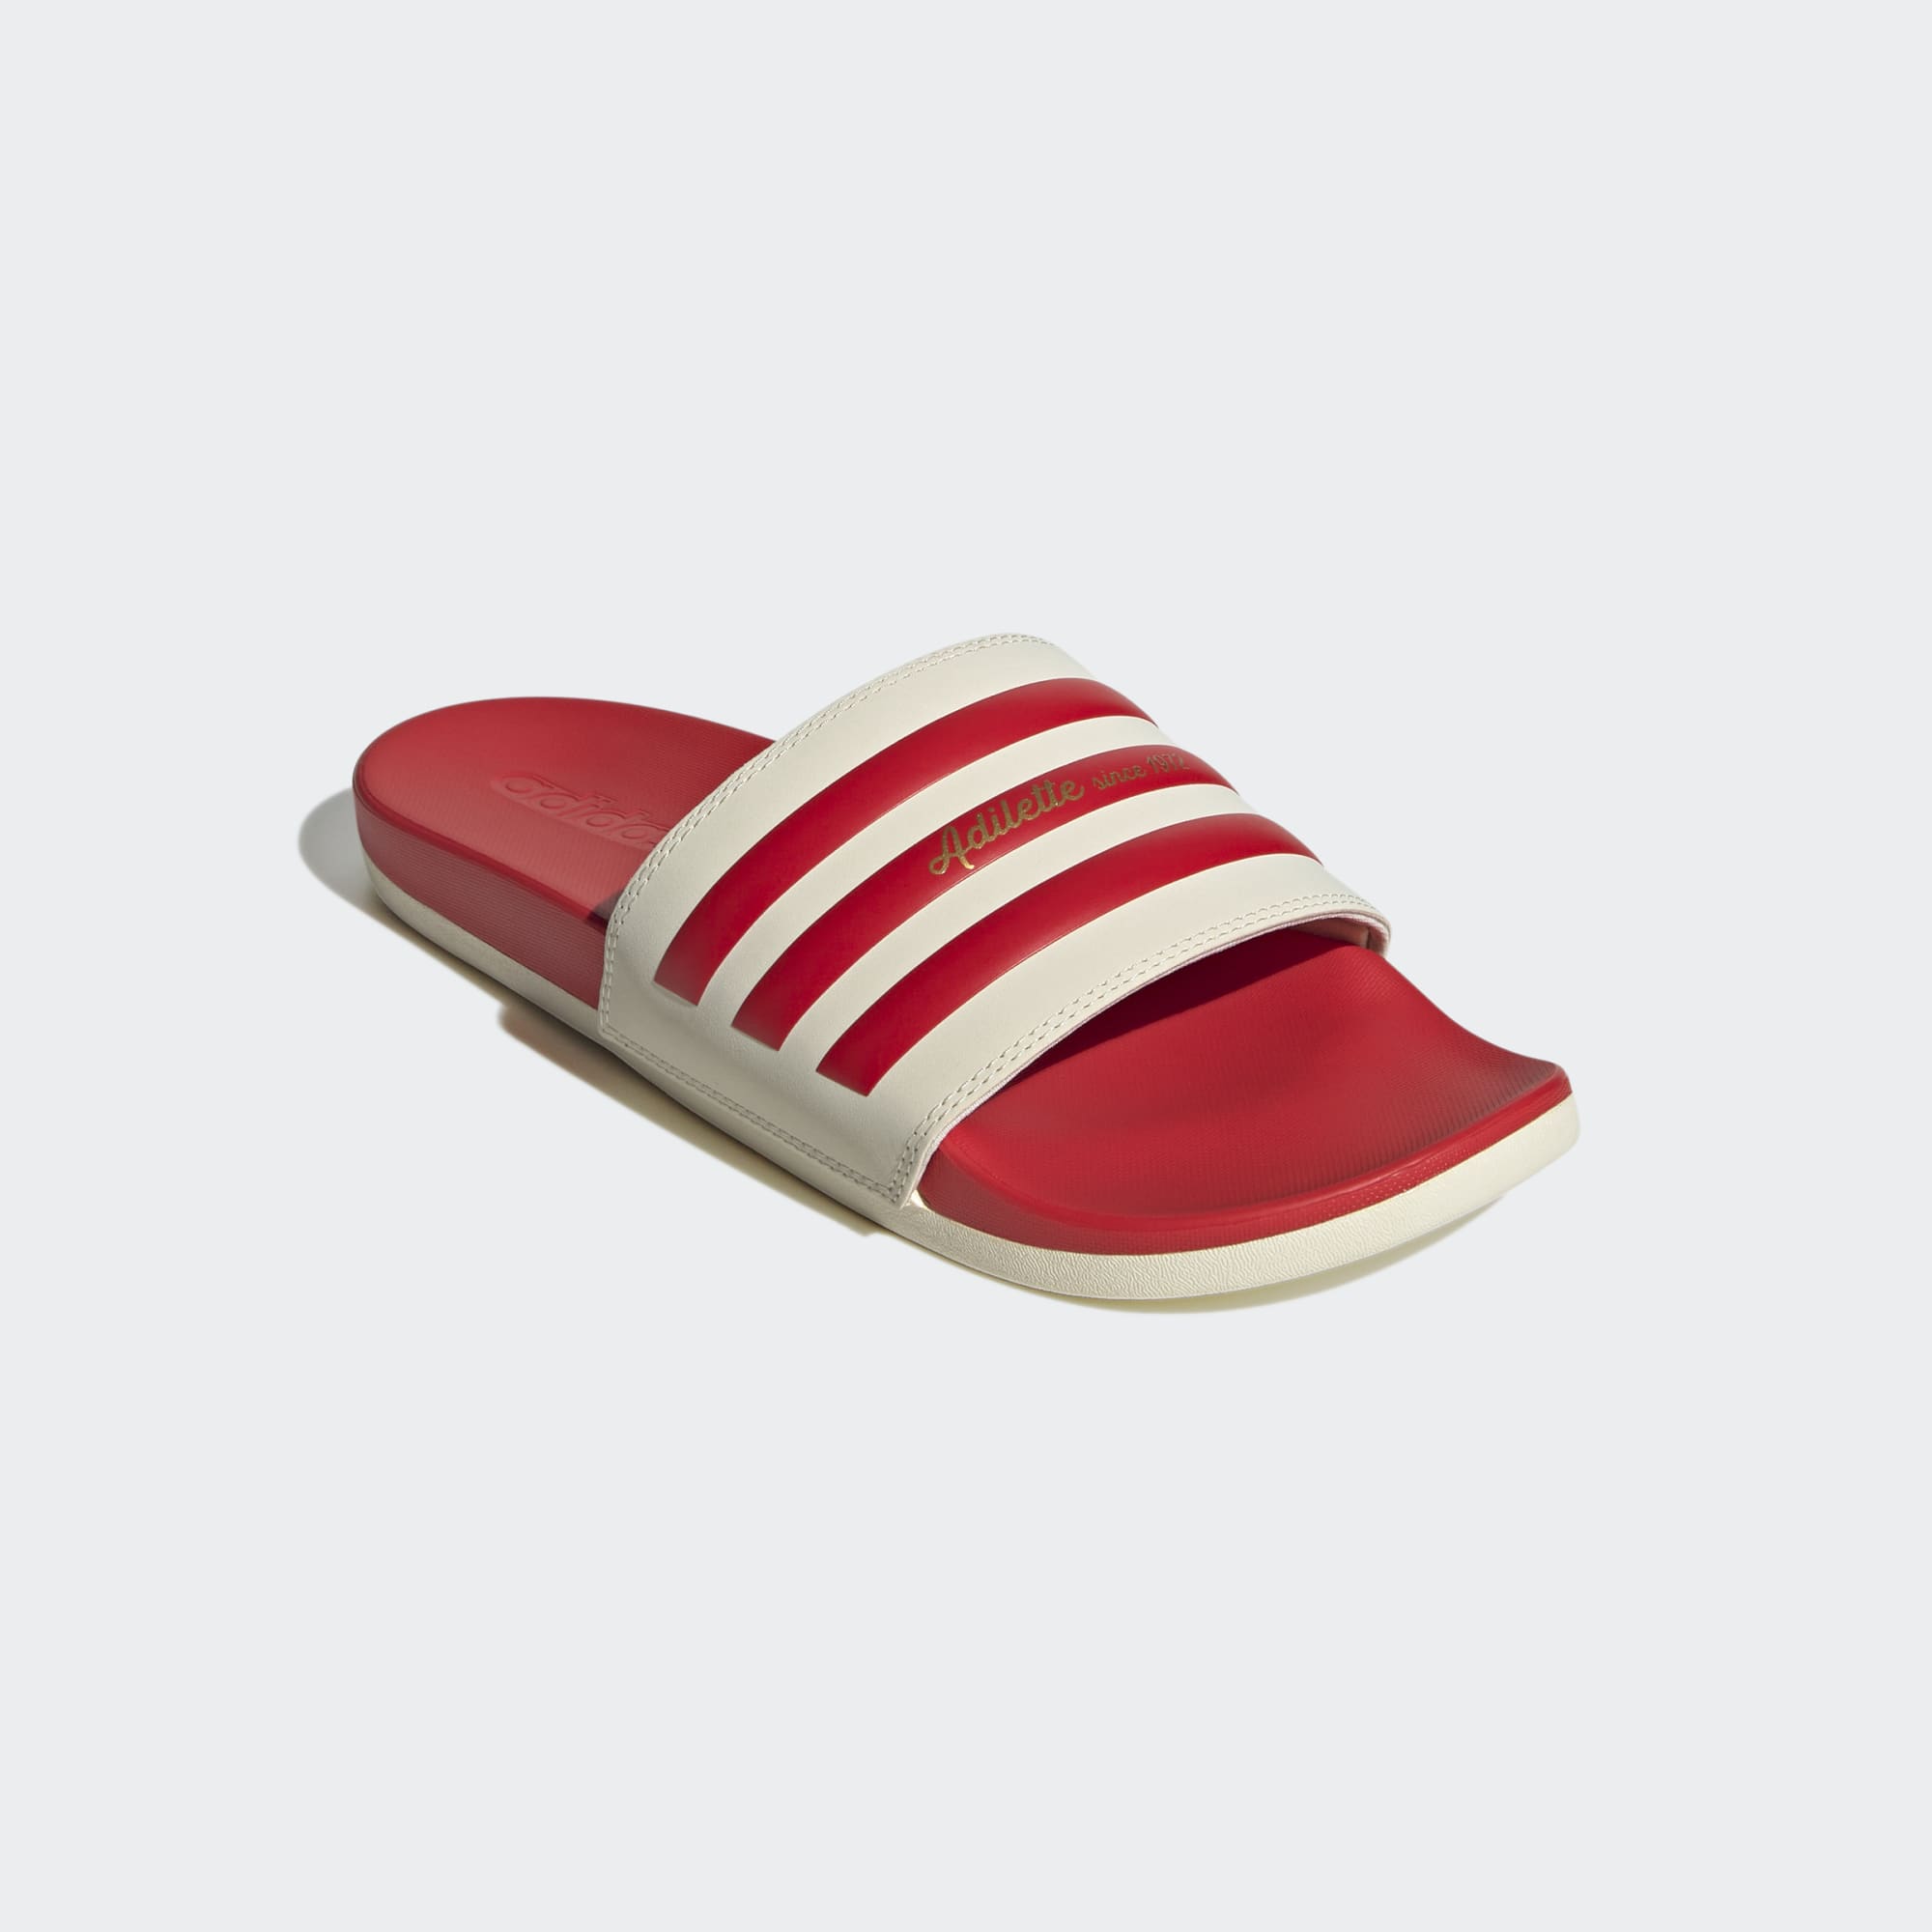 Comfort adidas Red Adilette - Metallic Stefans Vivid Wisconsin - Gold / Soccer Wonder / - Slides White